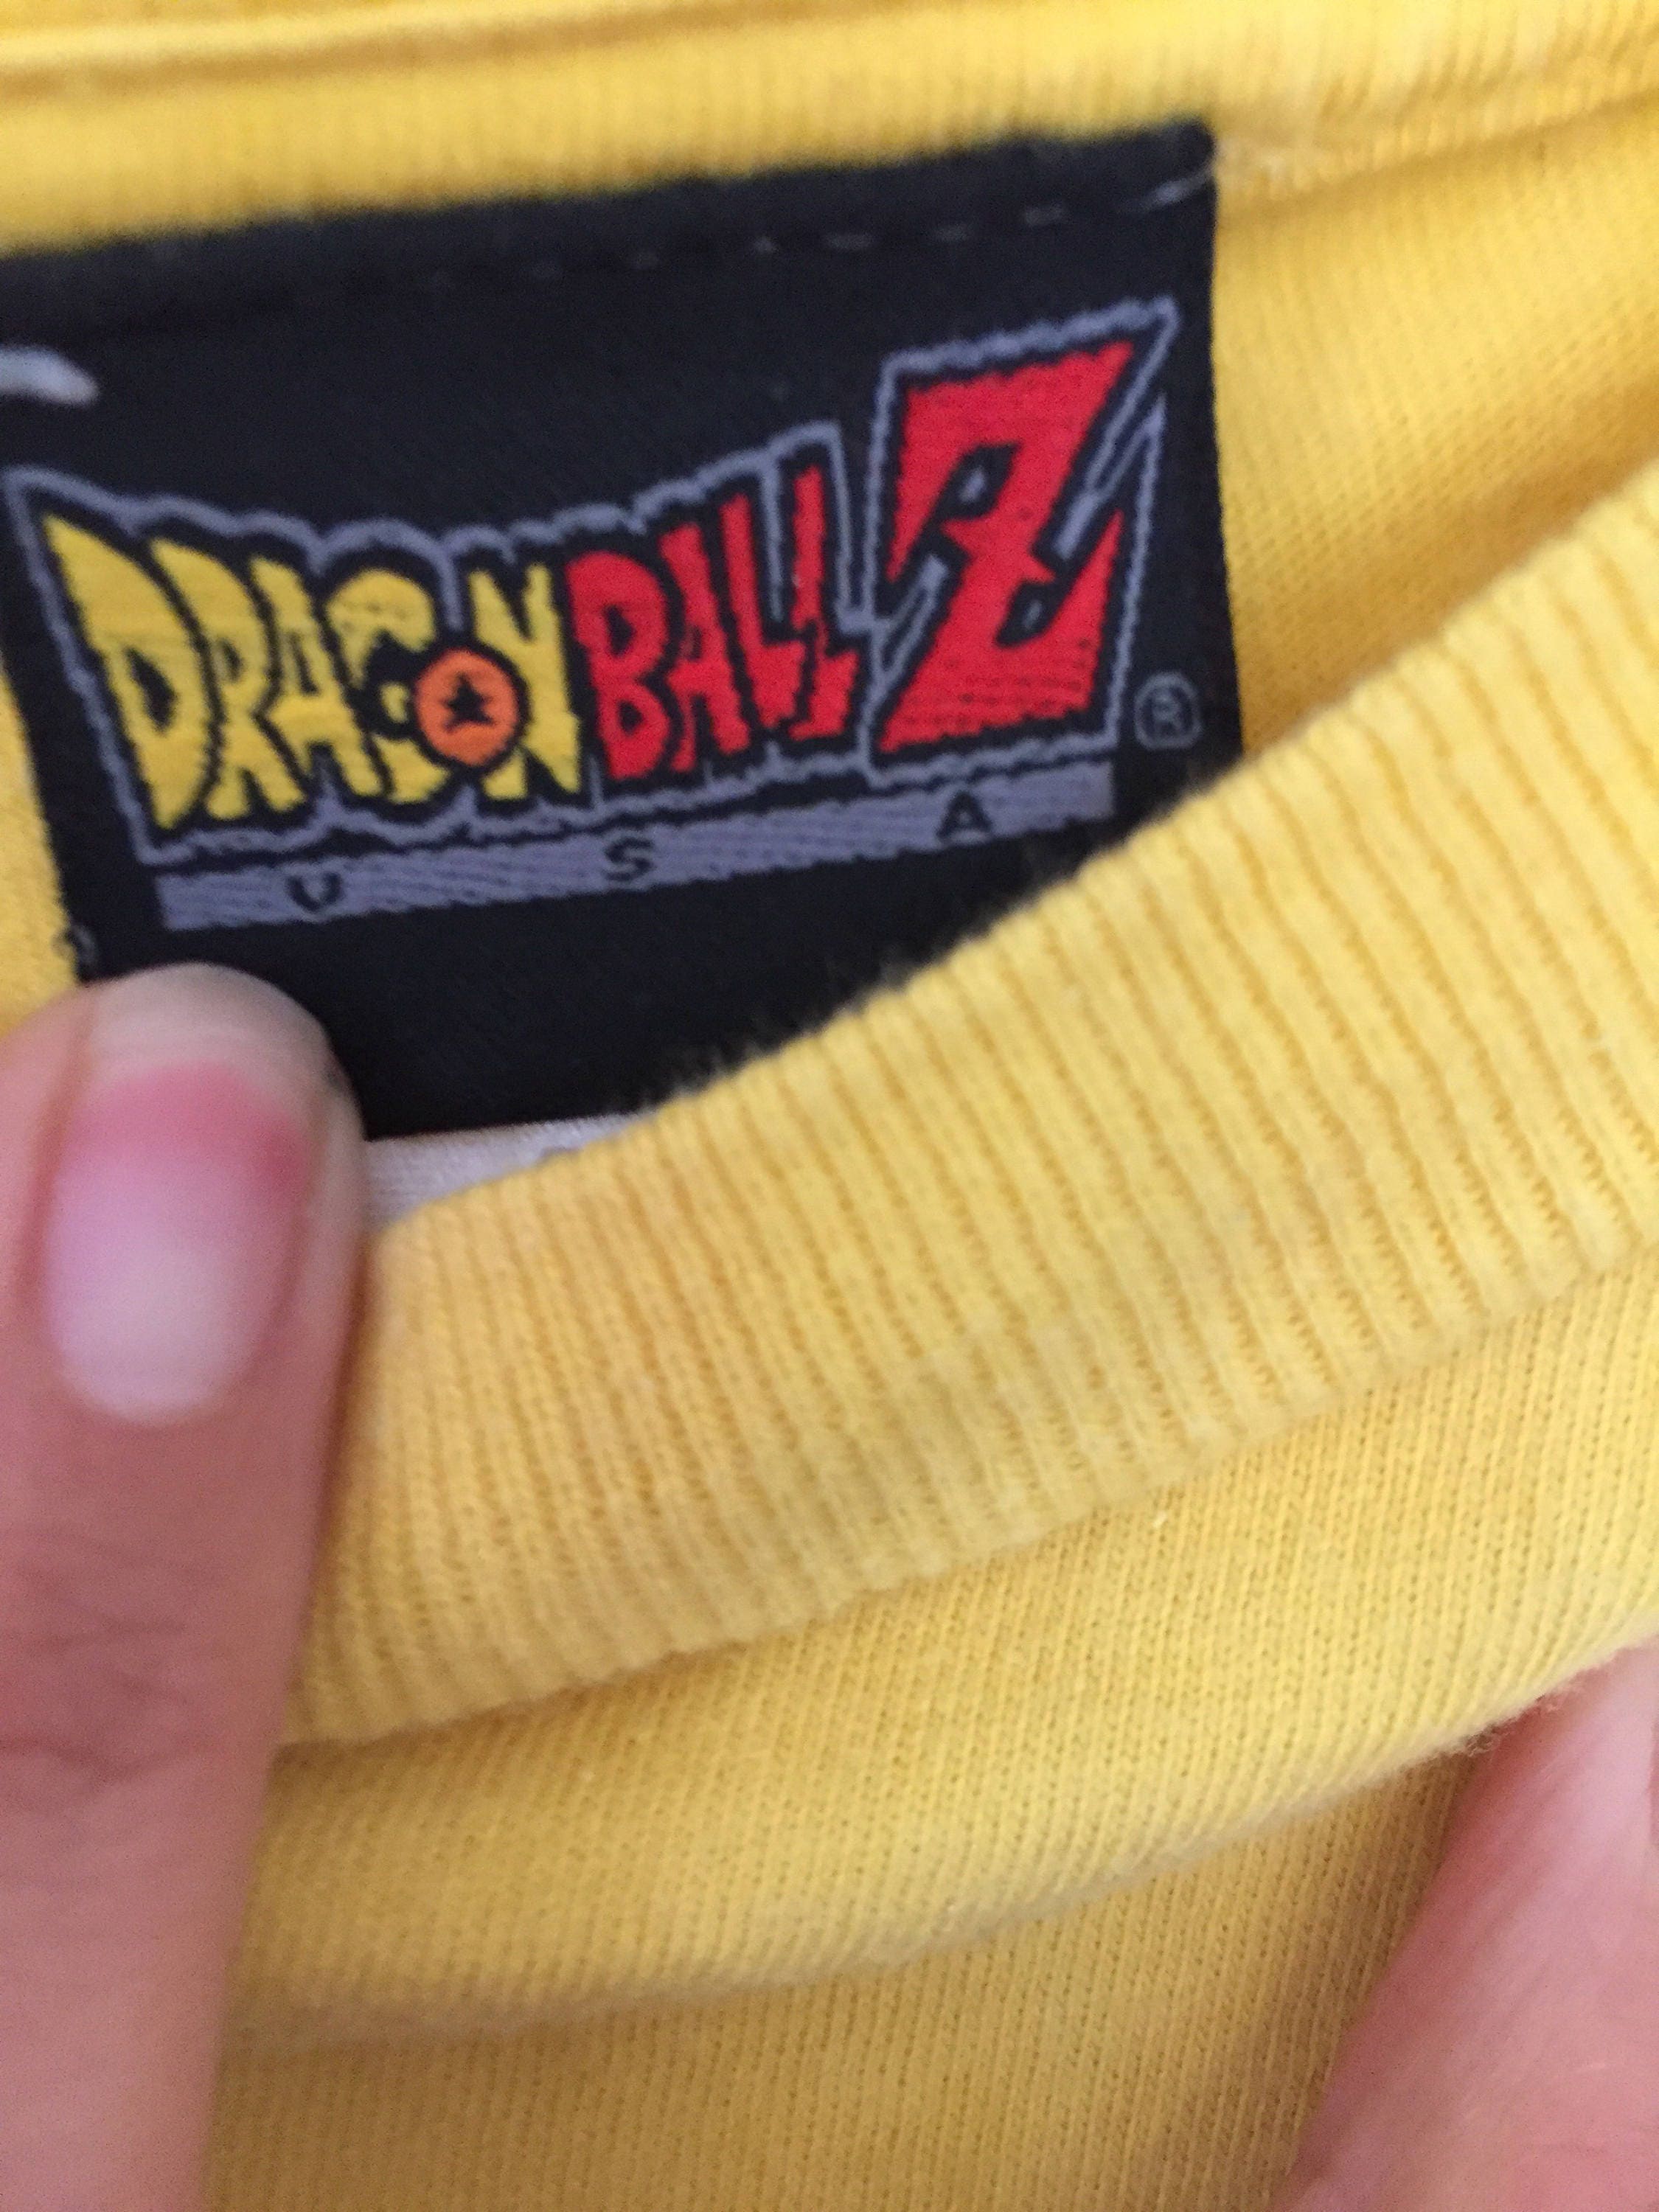 Vinatge Early 2000s Dragon Ball Z Shirt, Vintage Dragon Ball Z Tee Shirt, Vintage Dragon Ball Z ...